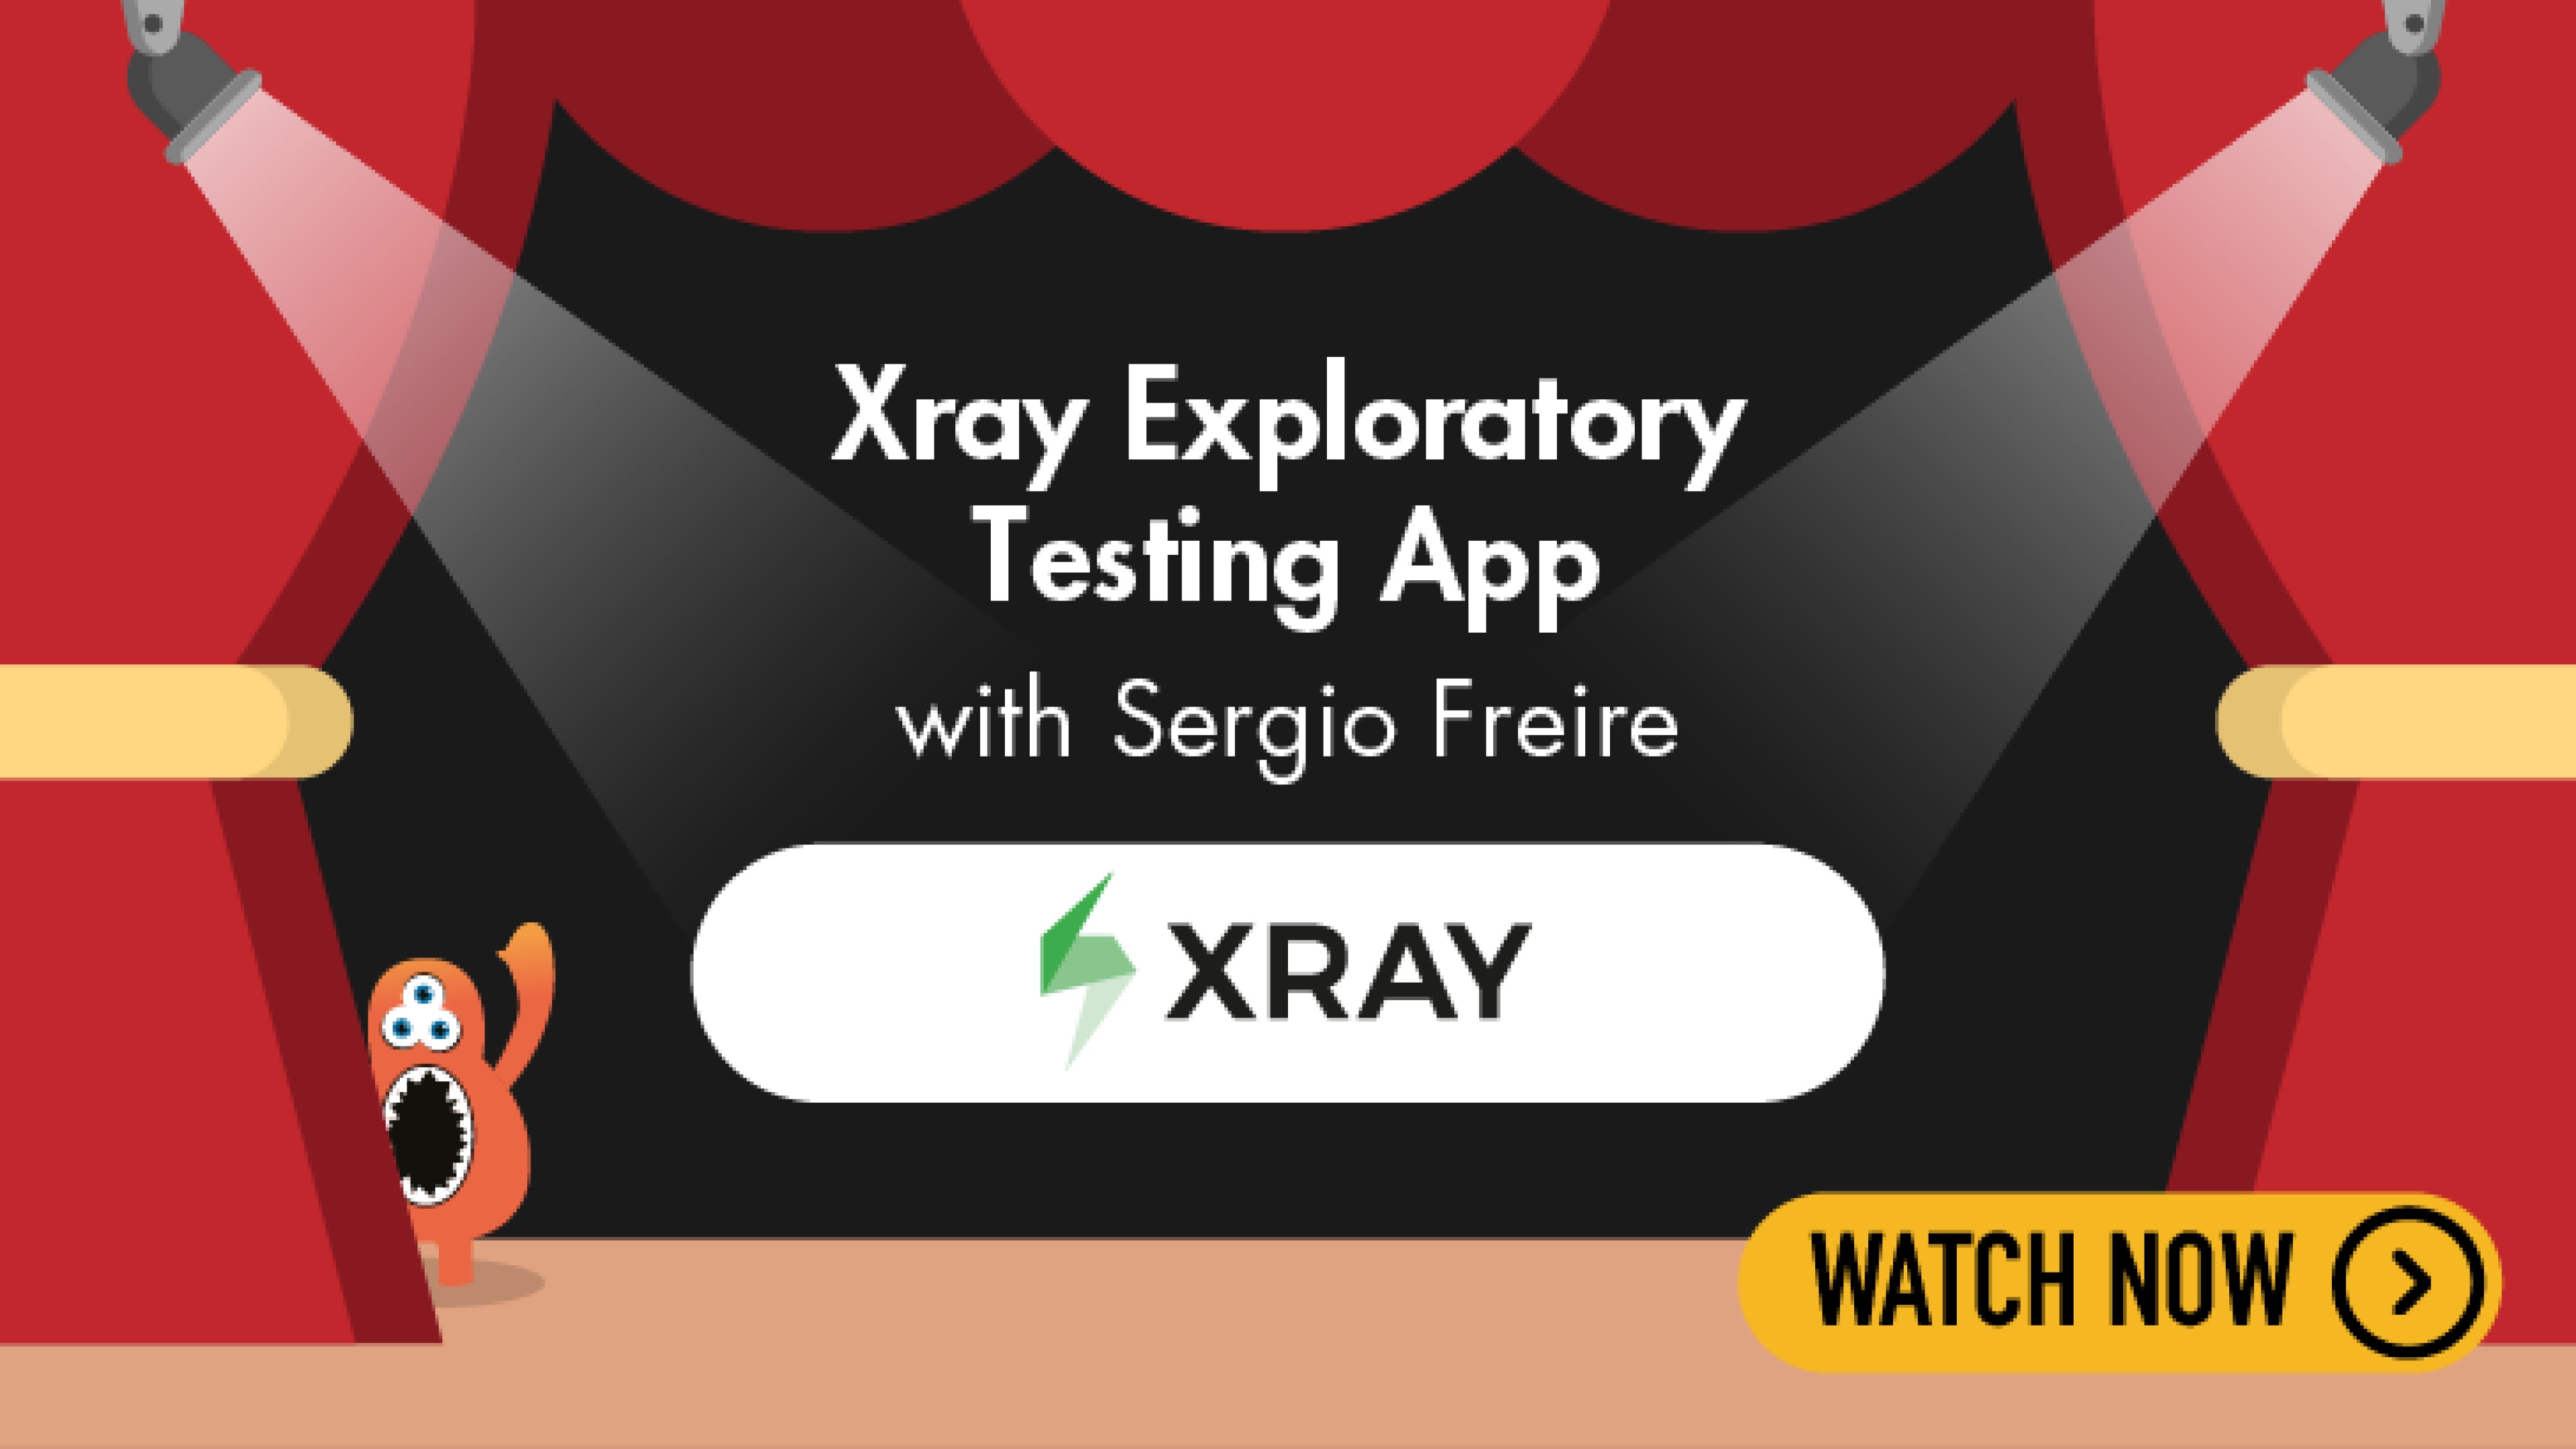 Xray Exploratory Testing App with Sergio Freire